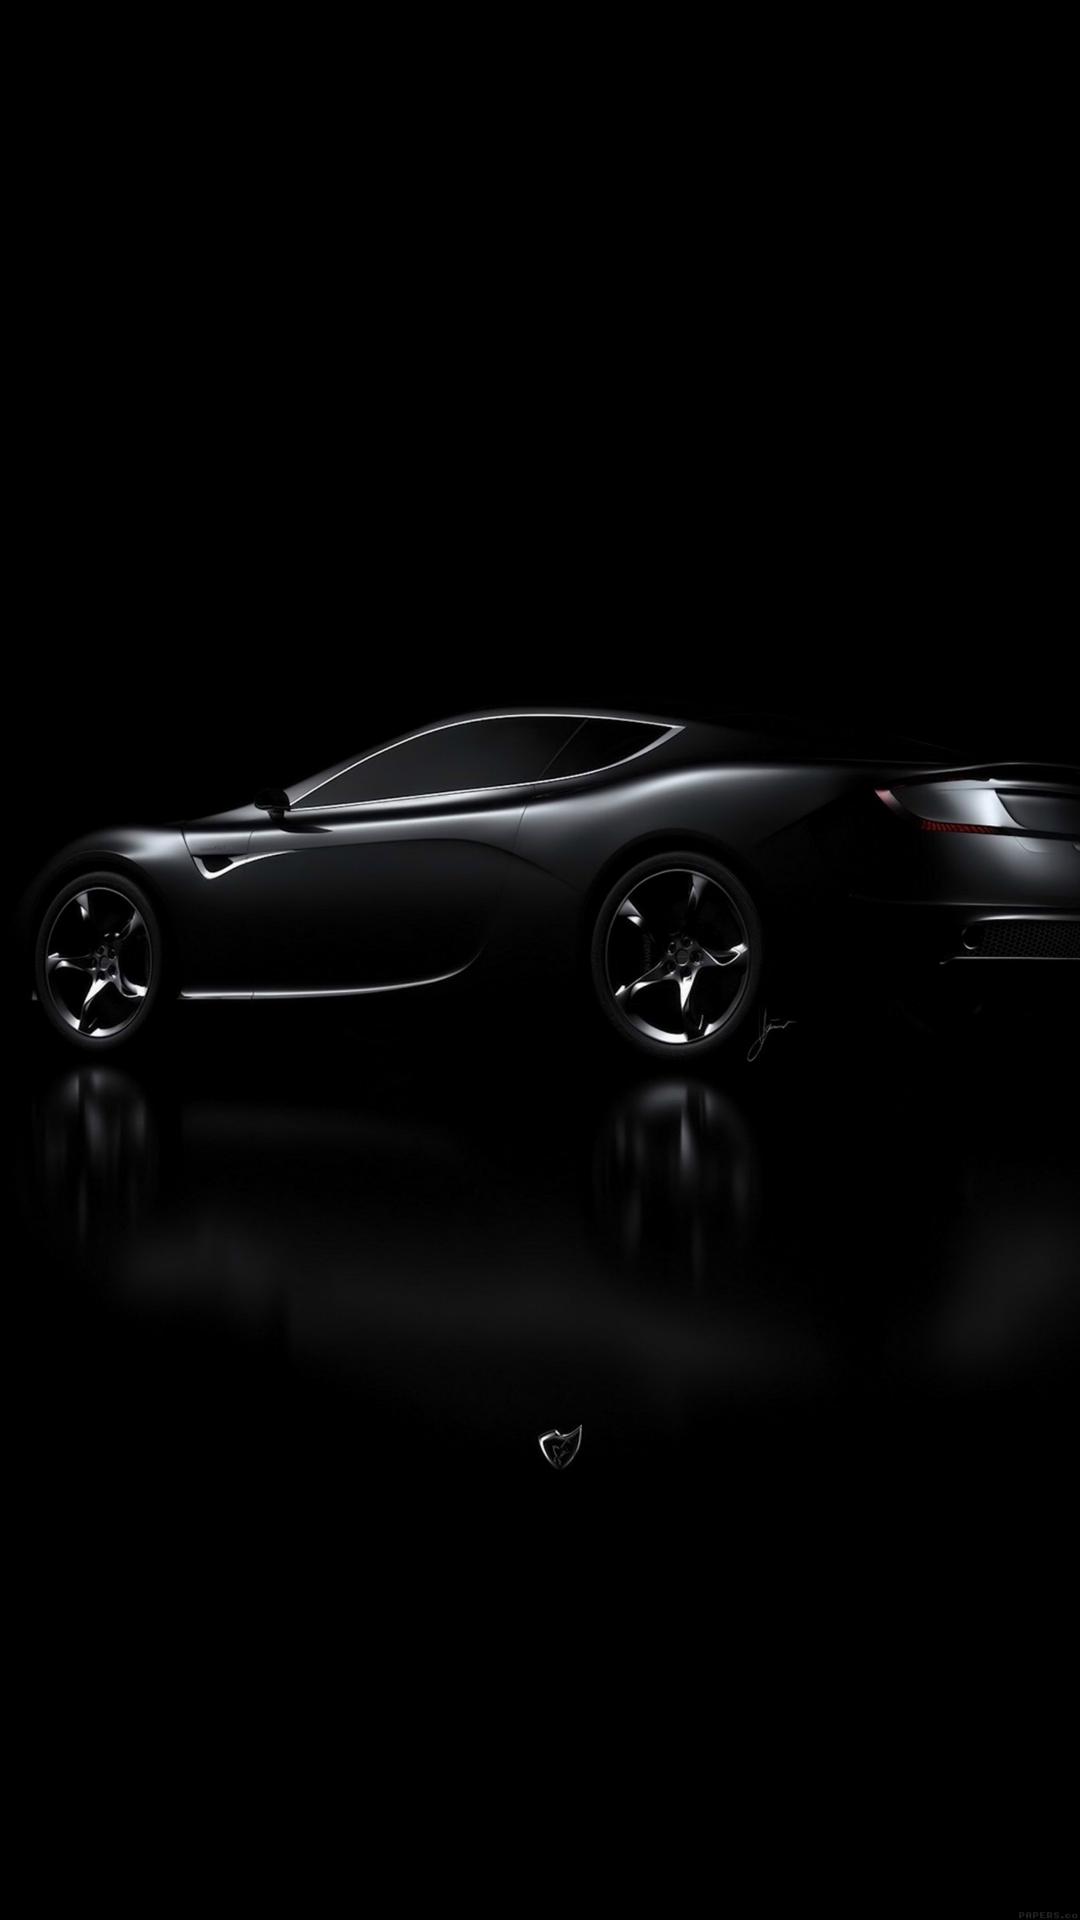 Aston Martin Black Car Dark iPhone 8 Wallpaper Free Download